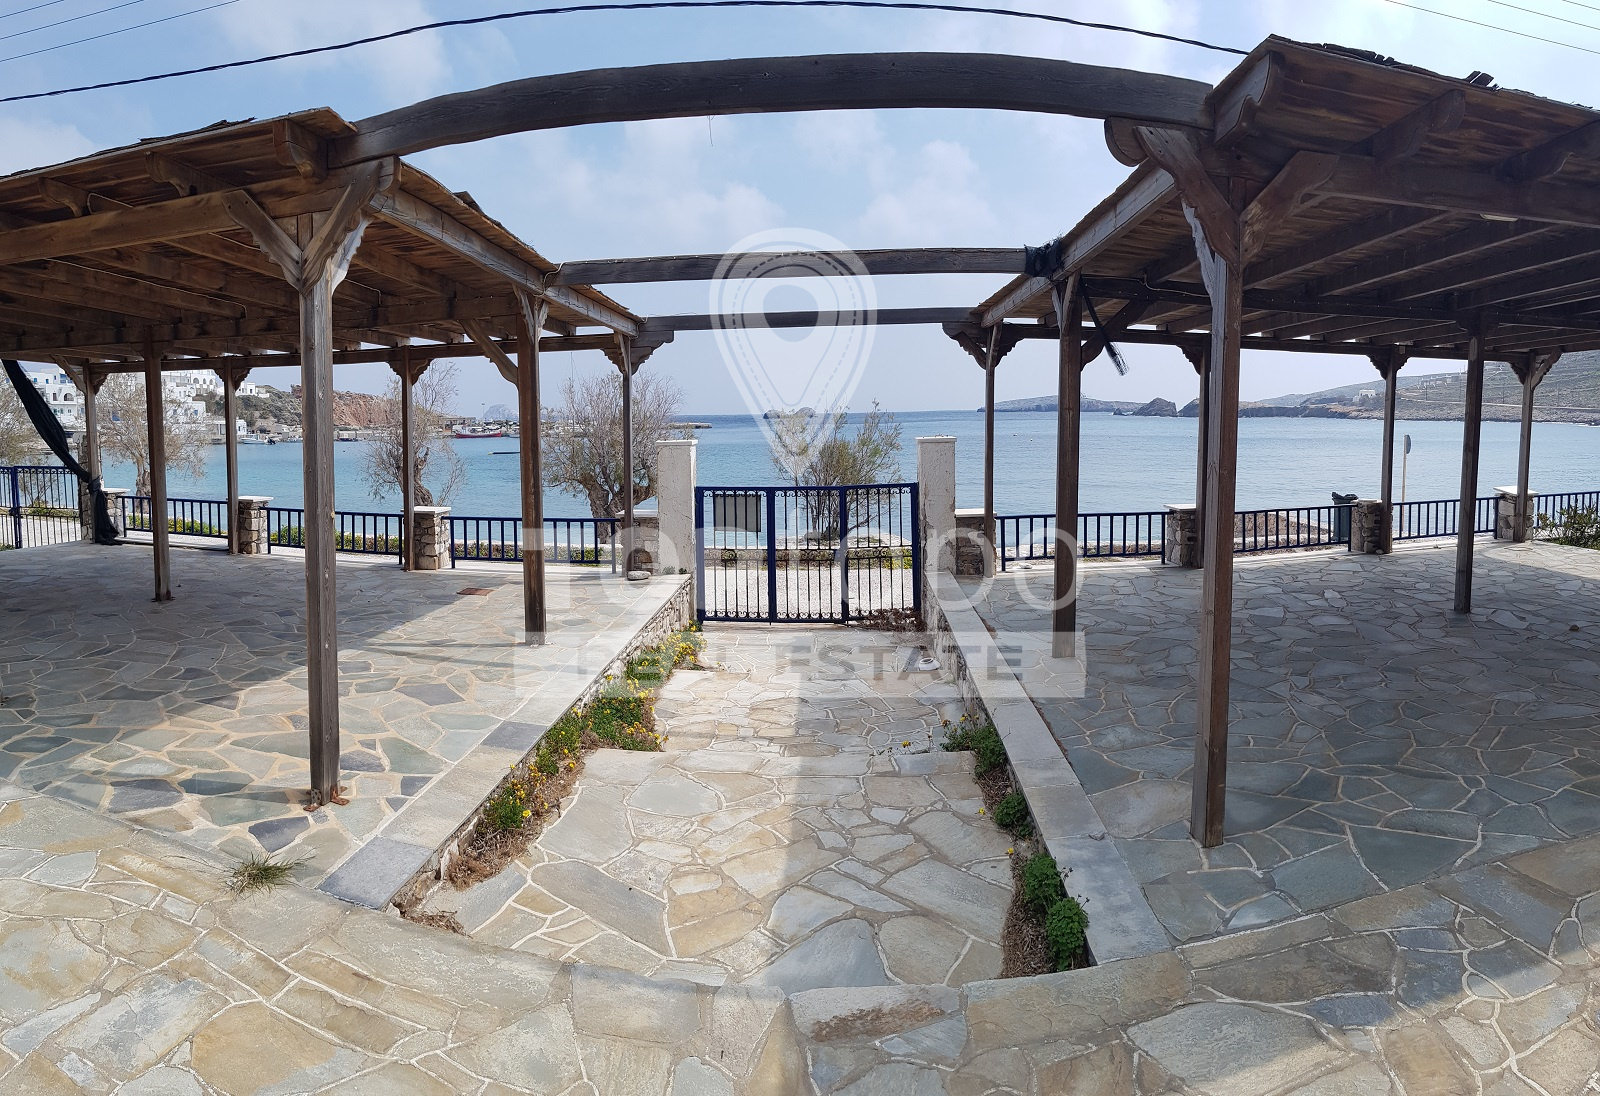 Folegandros island: Hotel at Karavostasis